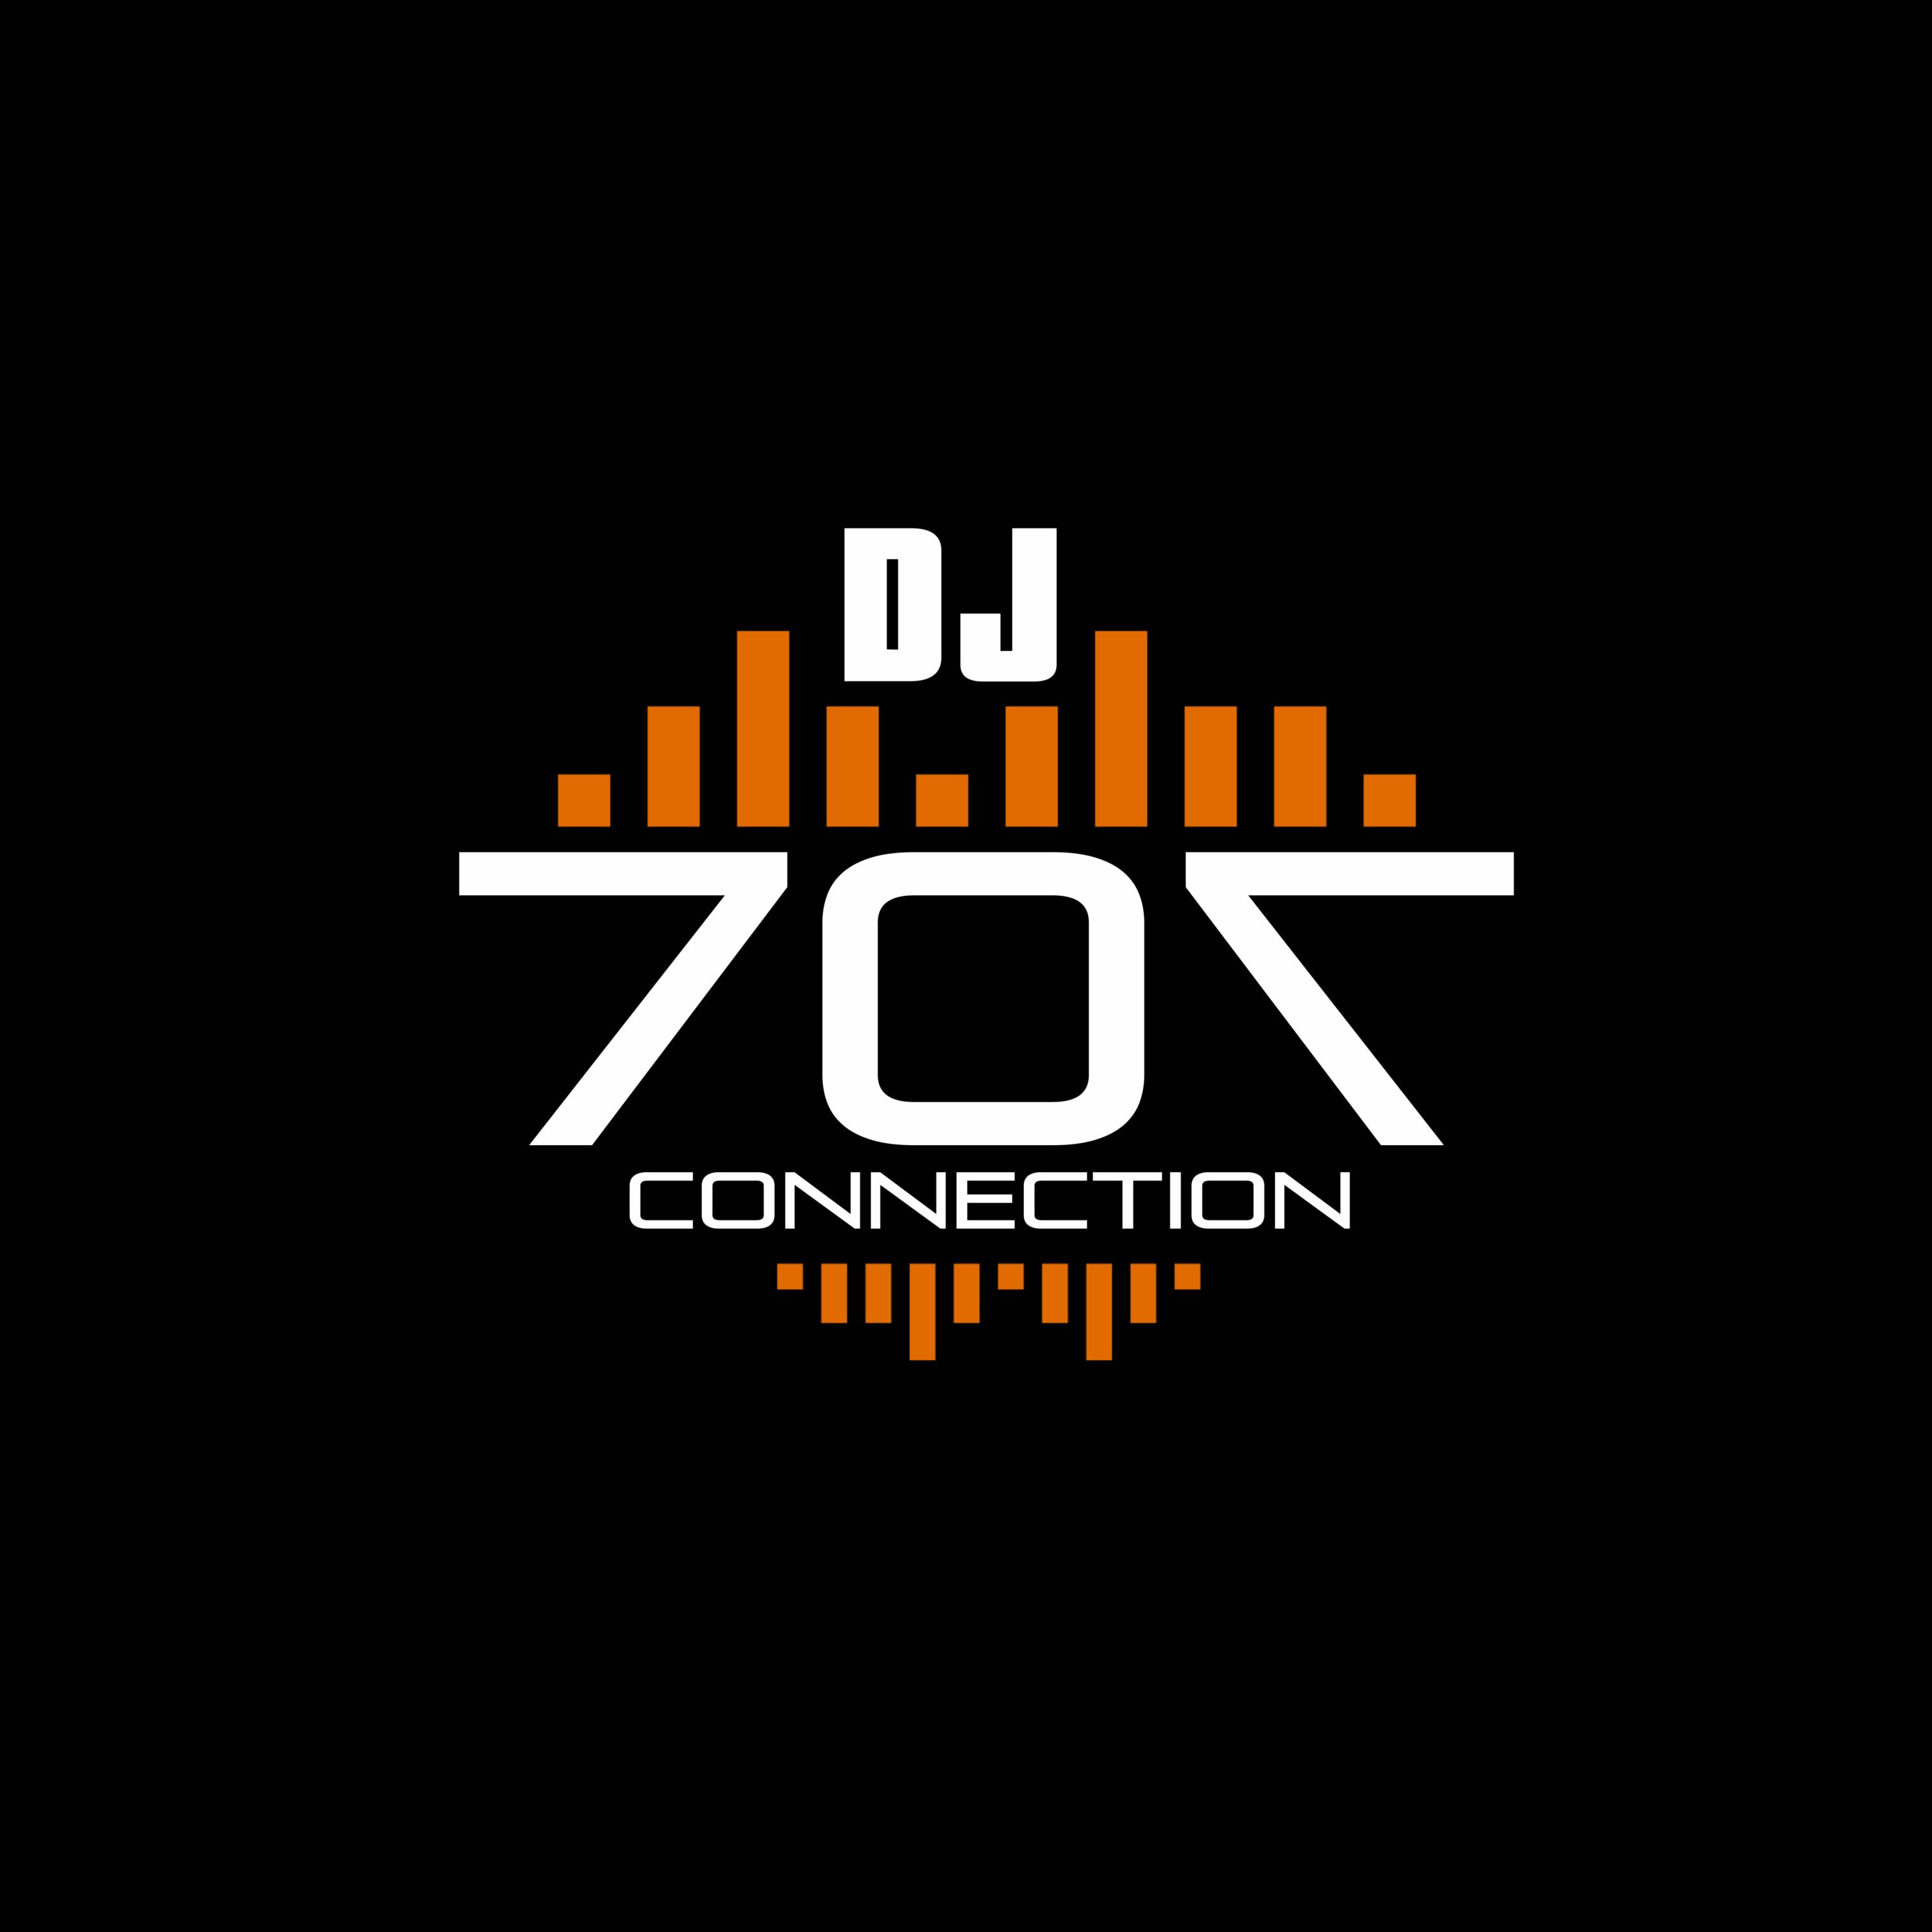 DJ707Connection